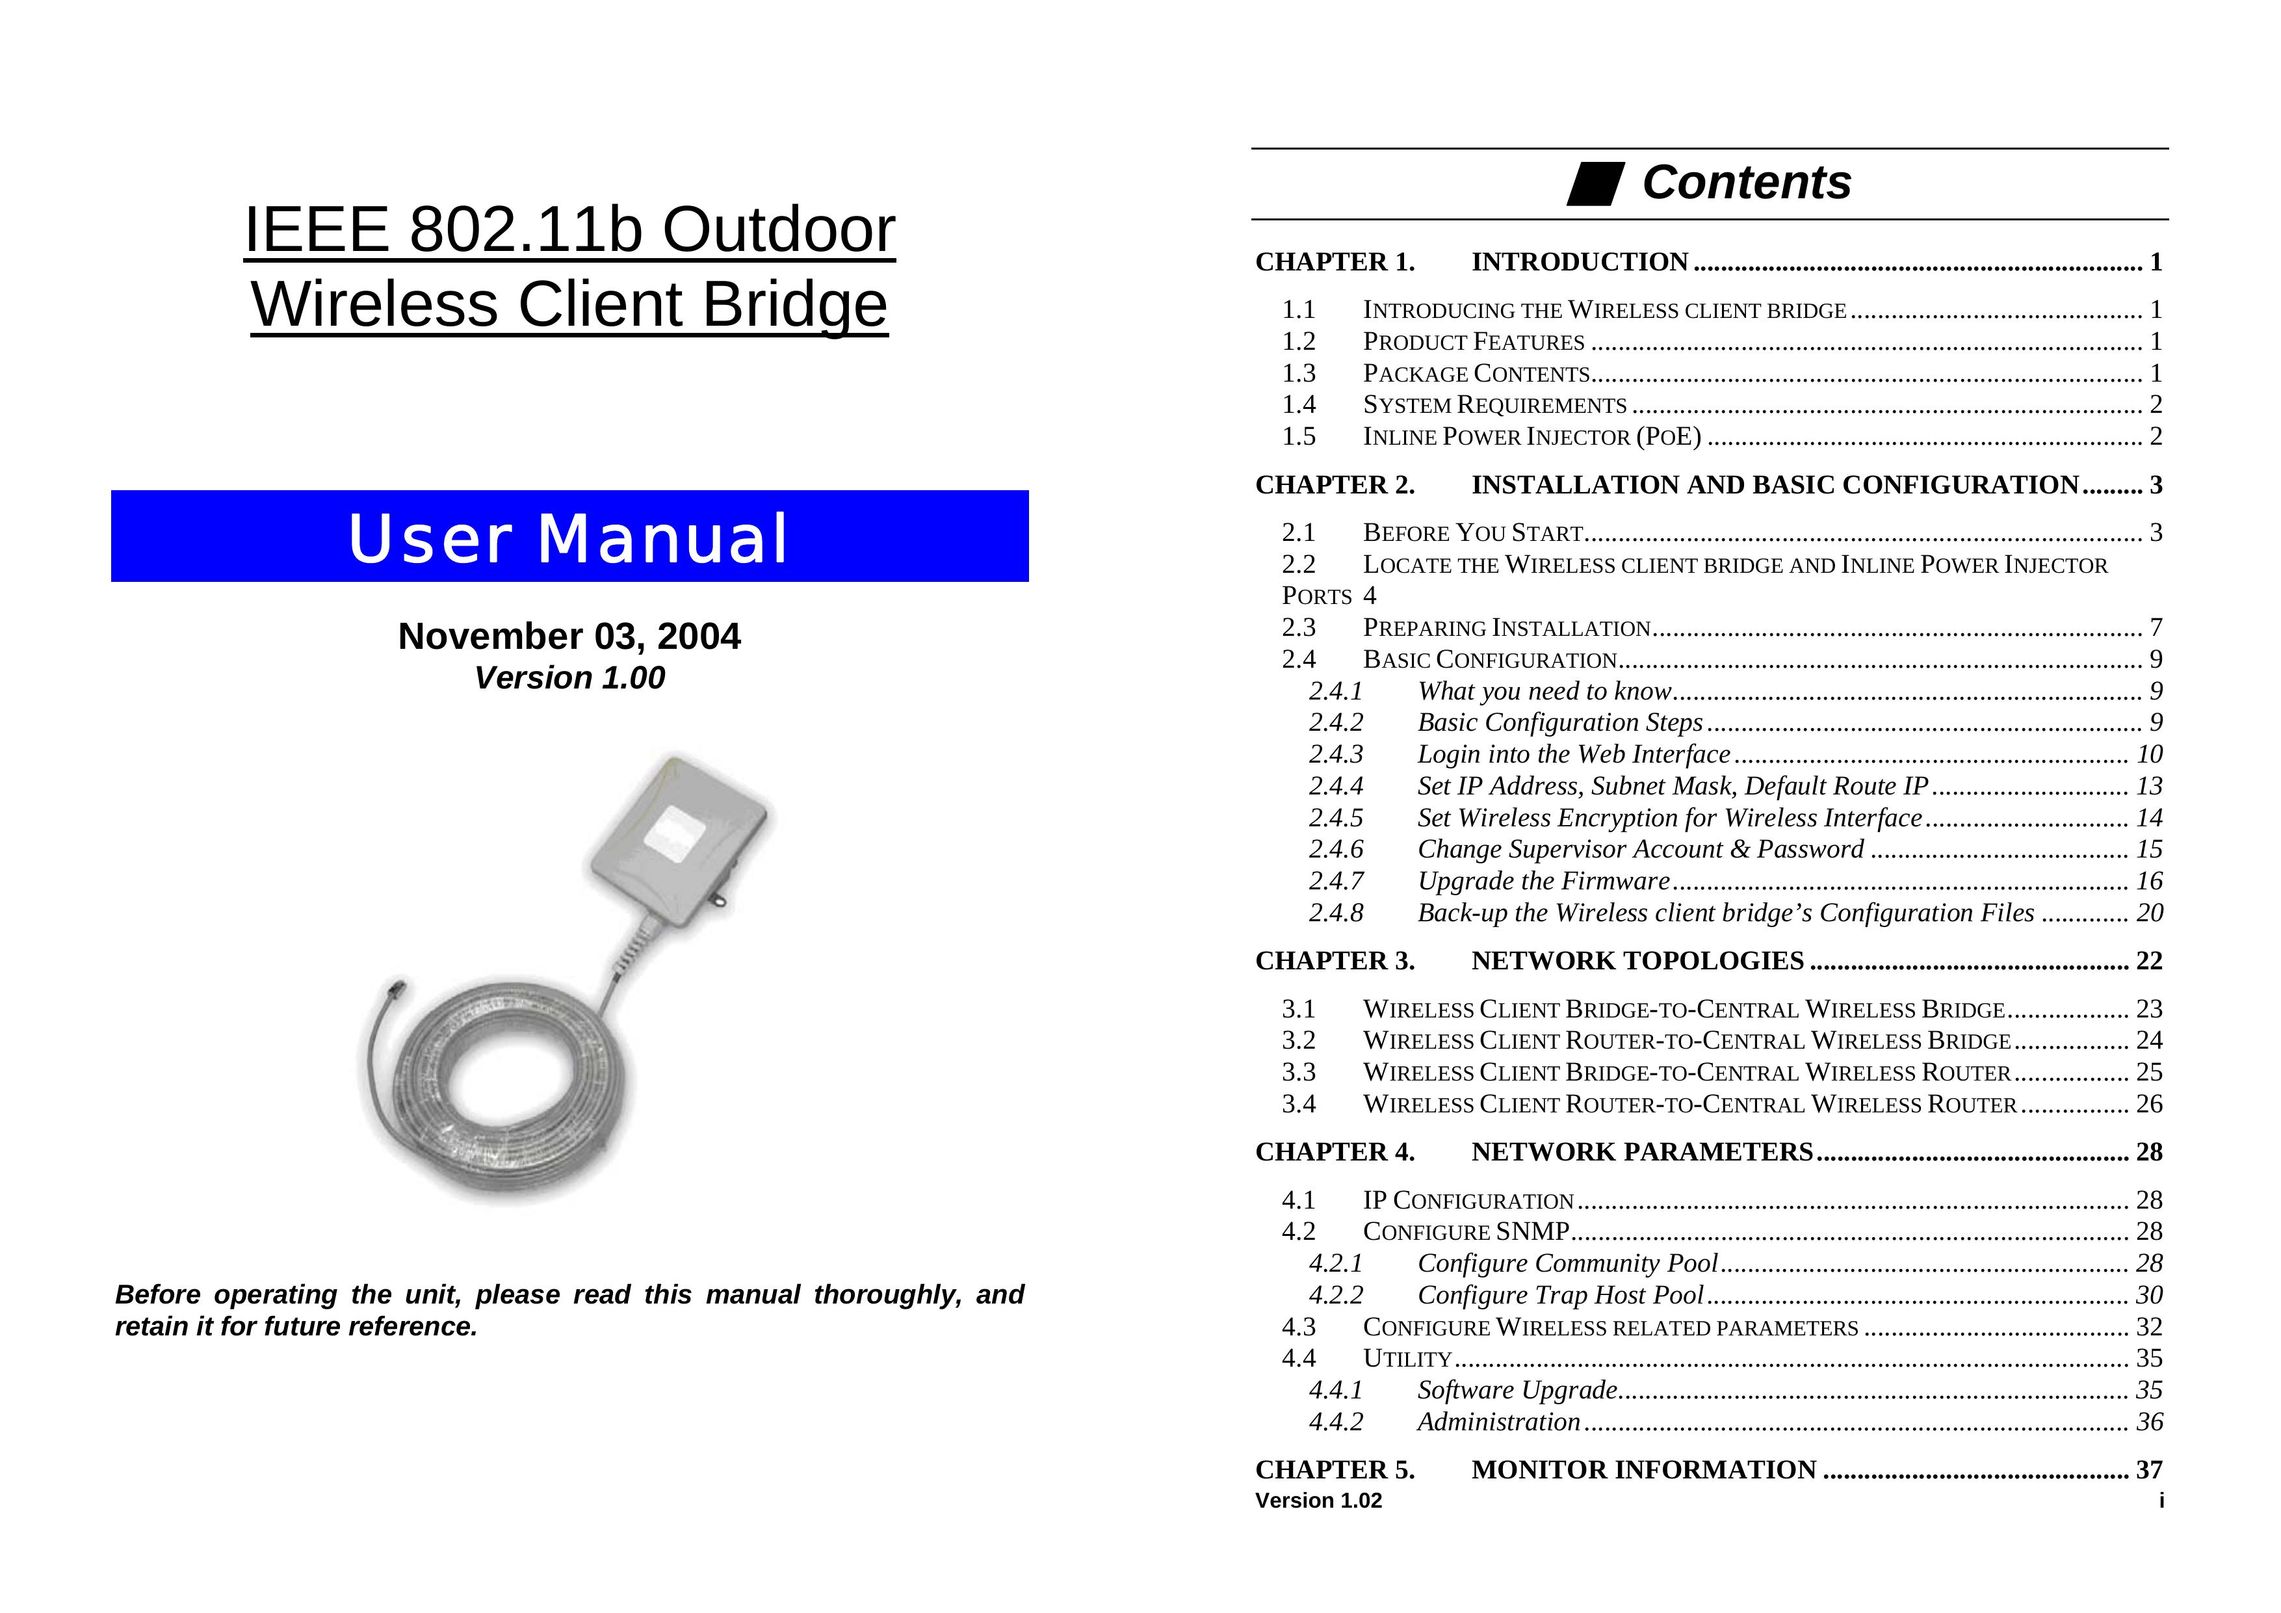 EnGenius Technologies IEEE 802.11b Outdoor Wireless Client Bridge Network Router User Manual